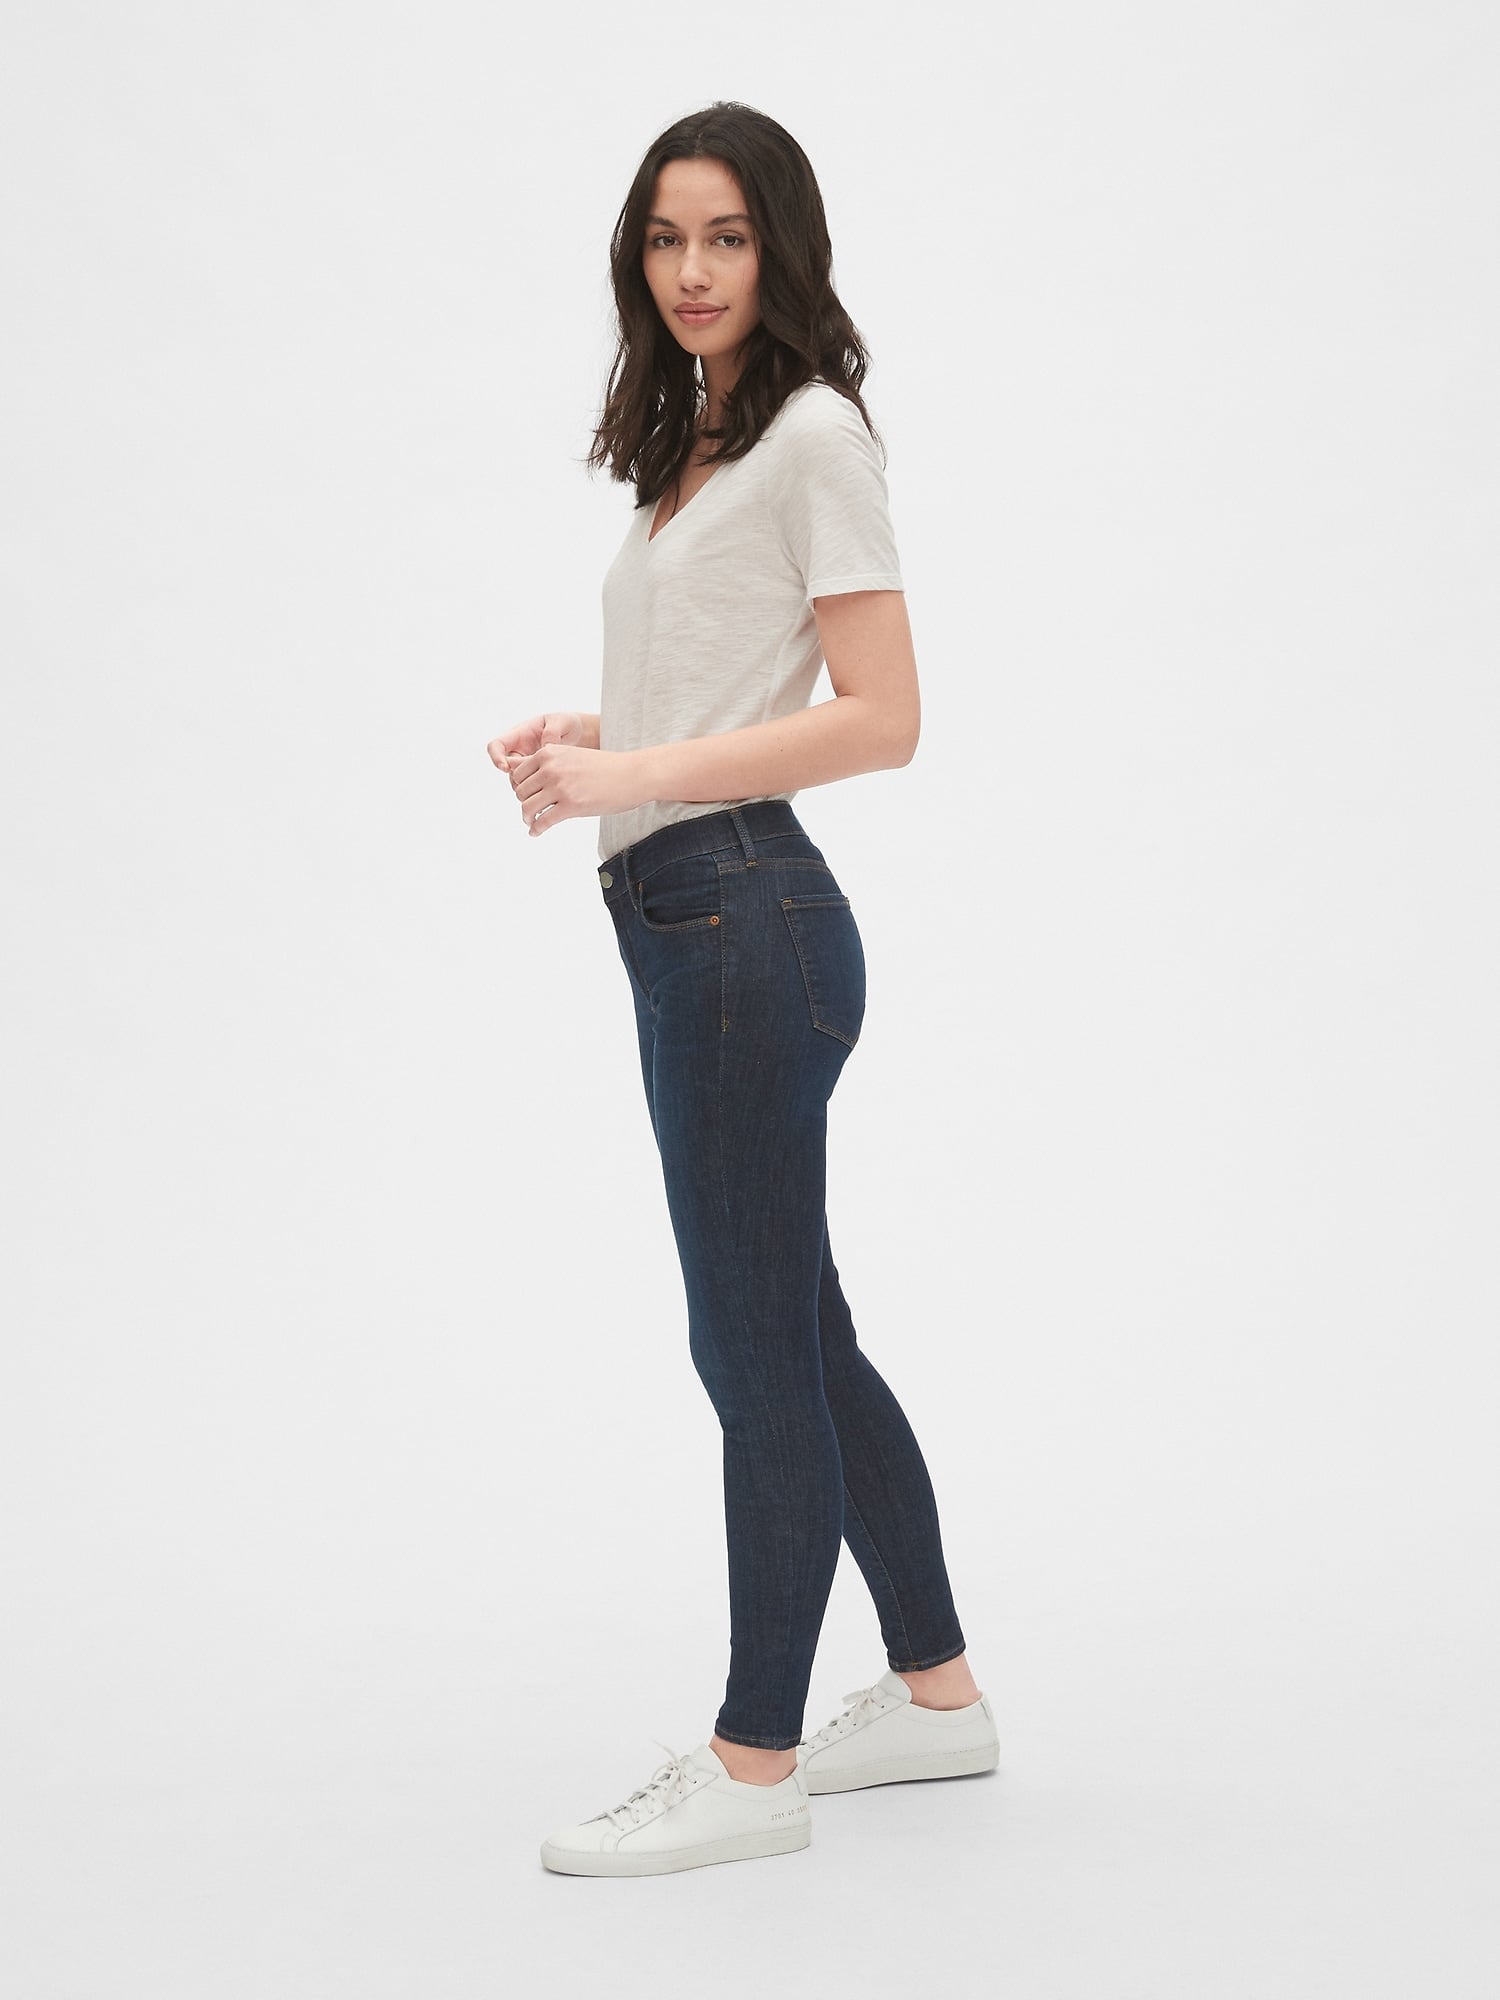 gap skinny jeans womens